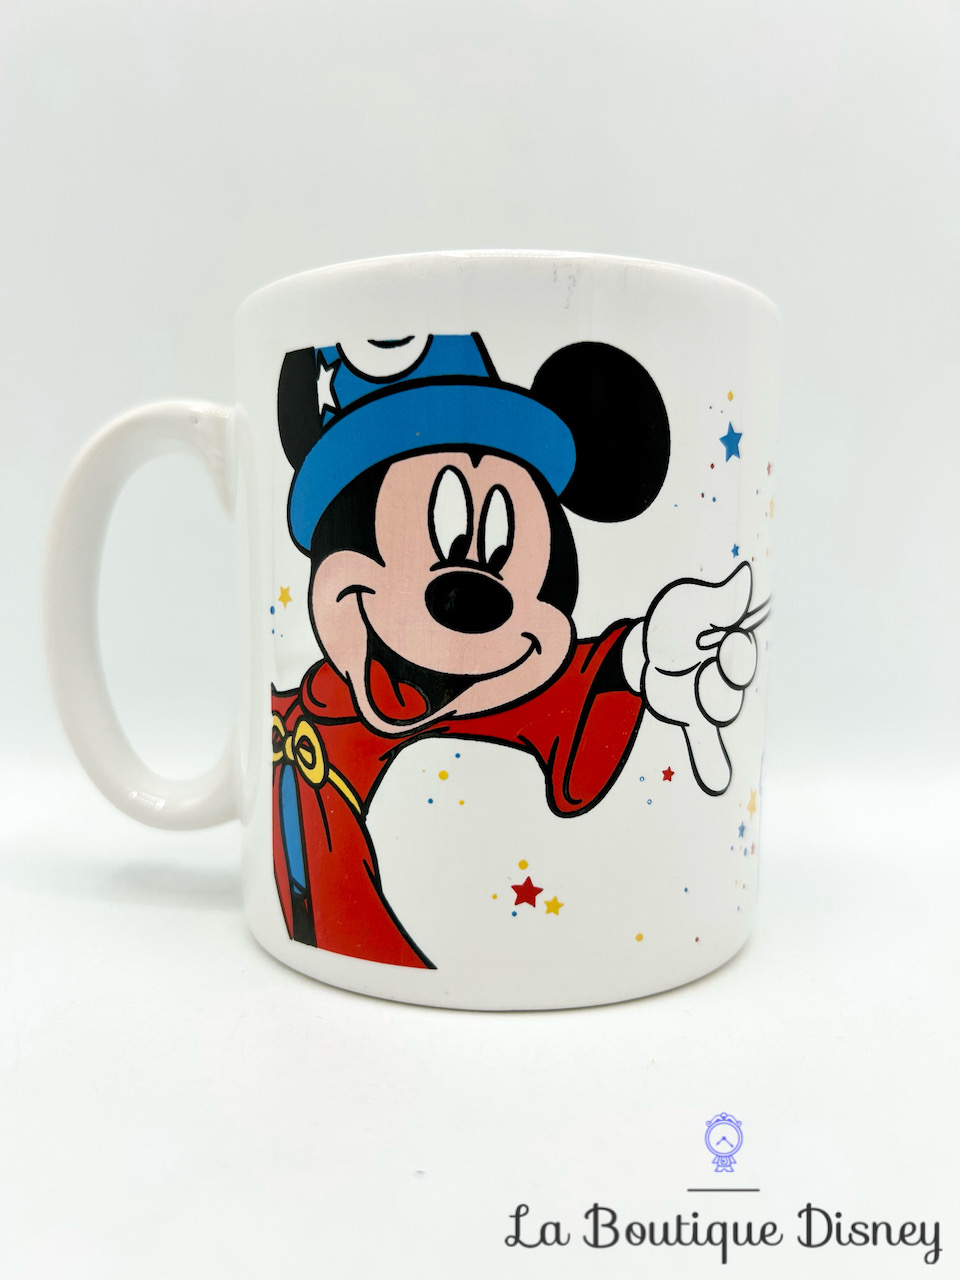 Tasse Mickey Mouse Fantasia Disneyland Paris England mug Disney vintage chateau magie